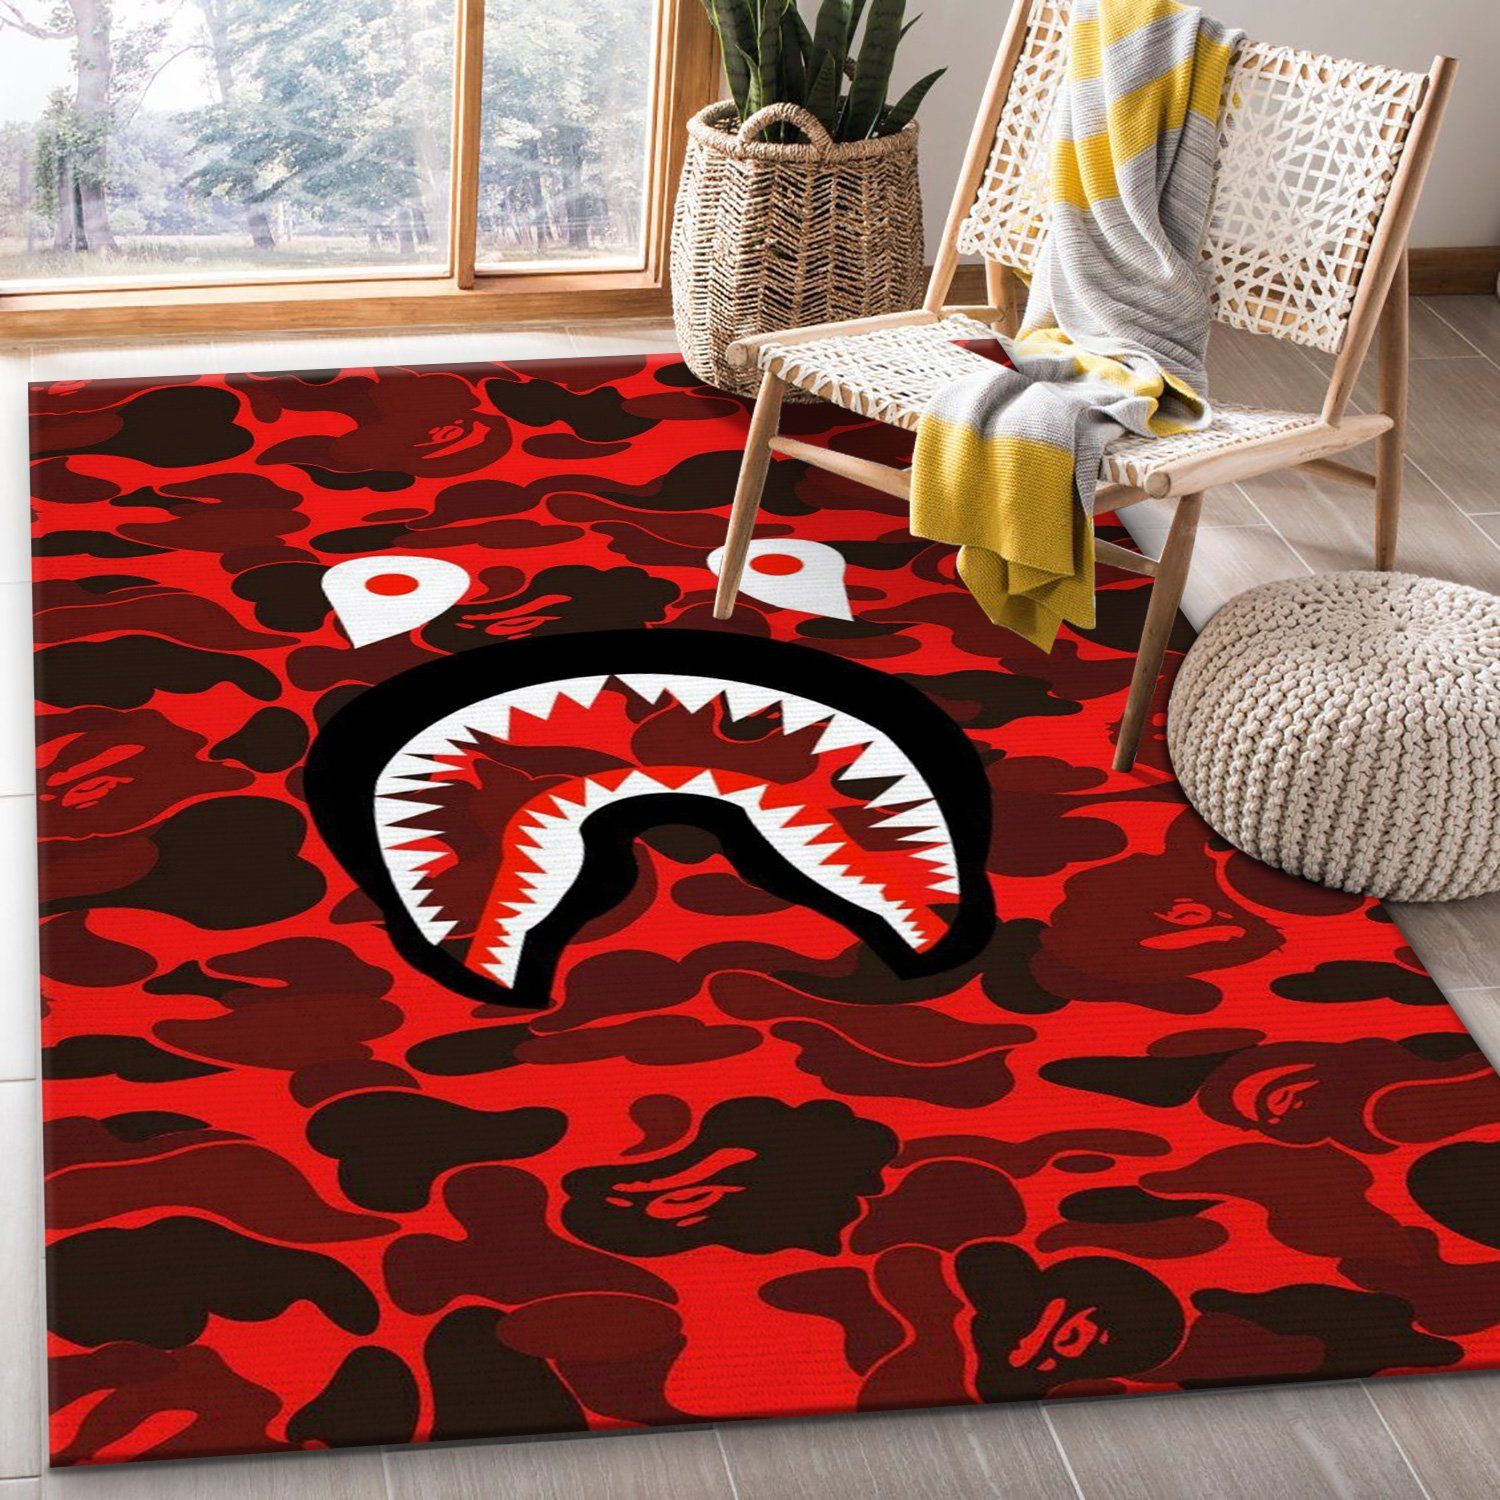 Bearbrick Bape Shark Camo Area Rugs Bedroom Rug Christmas Gift US